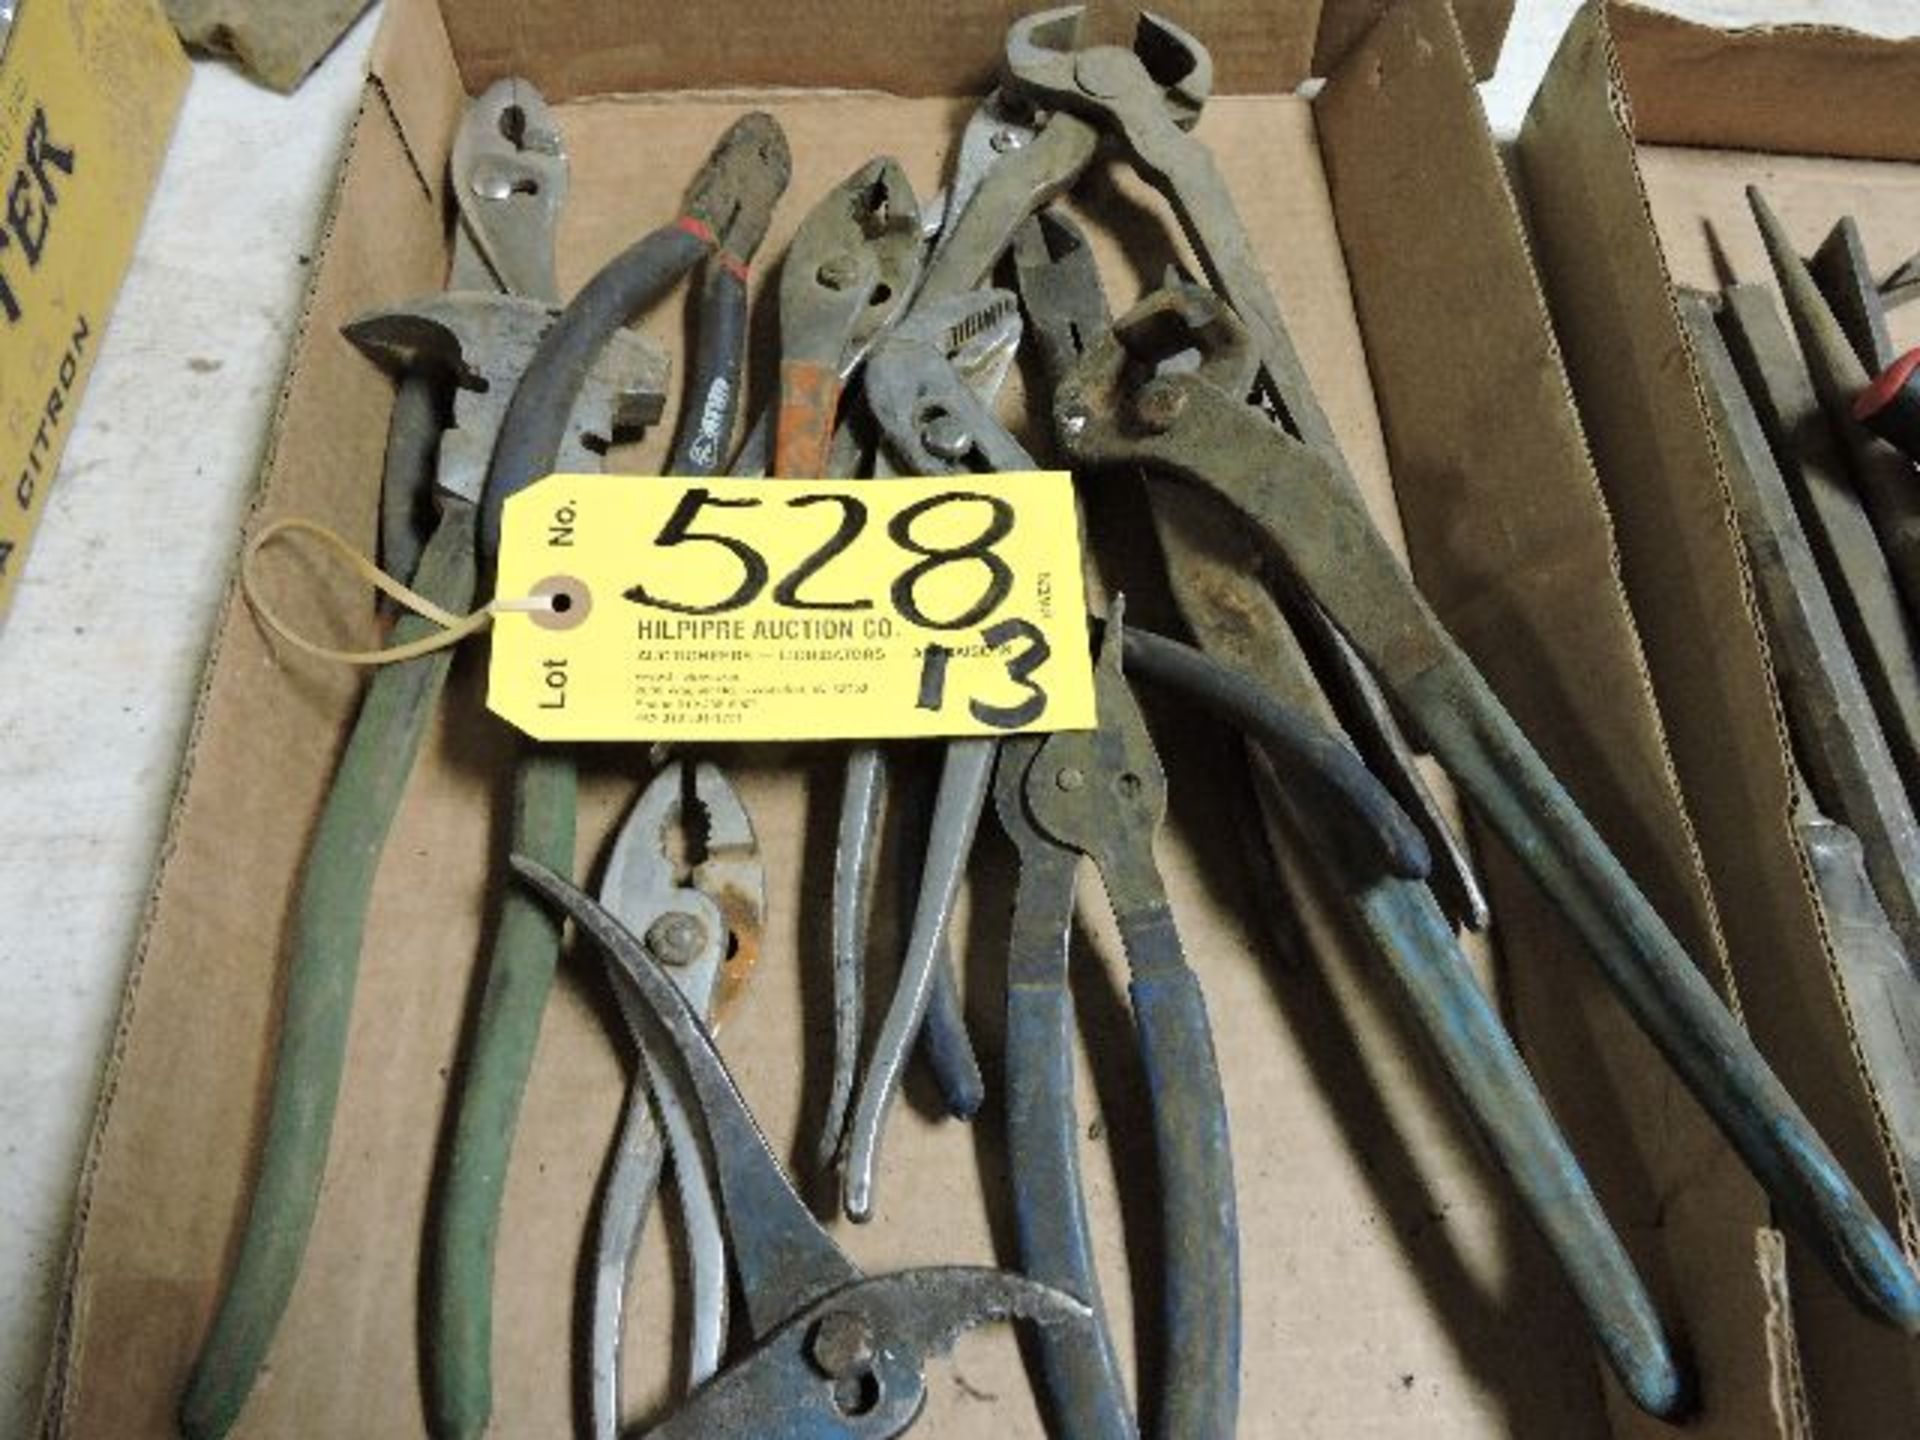 Wire cutters, pliers, side hacksaws.